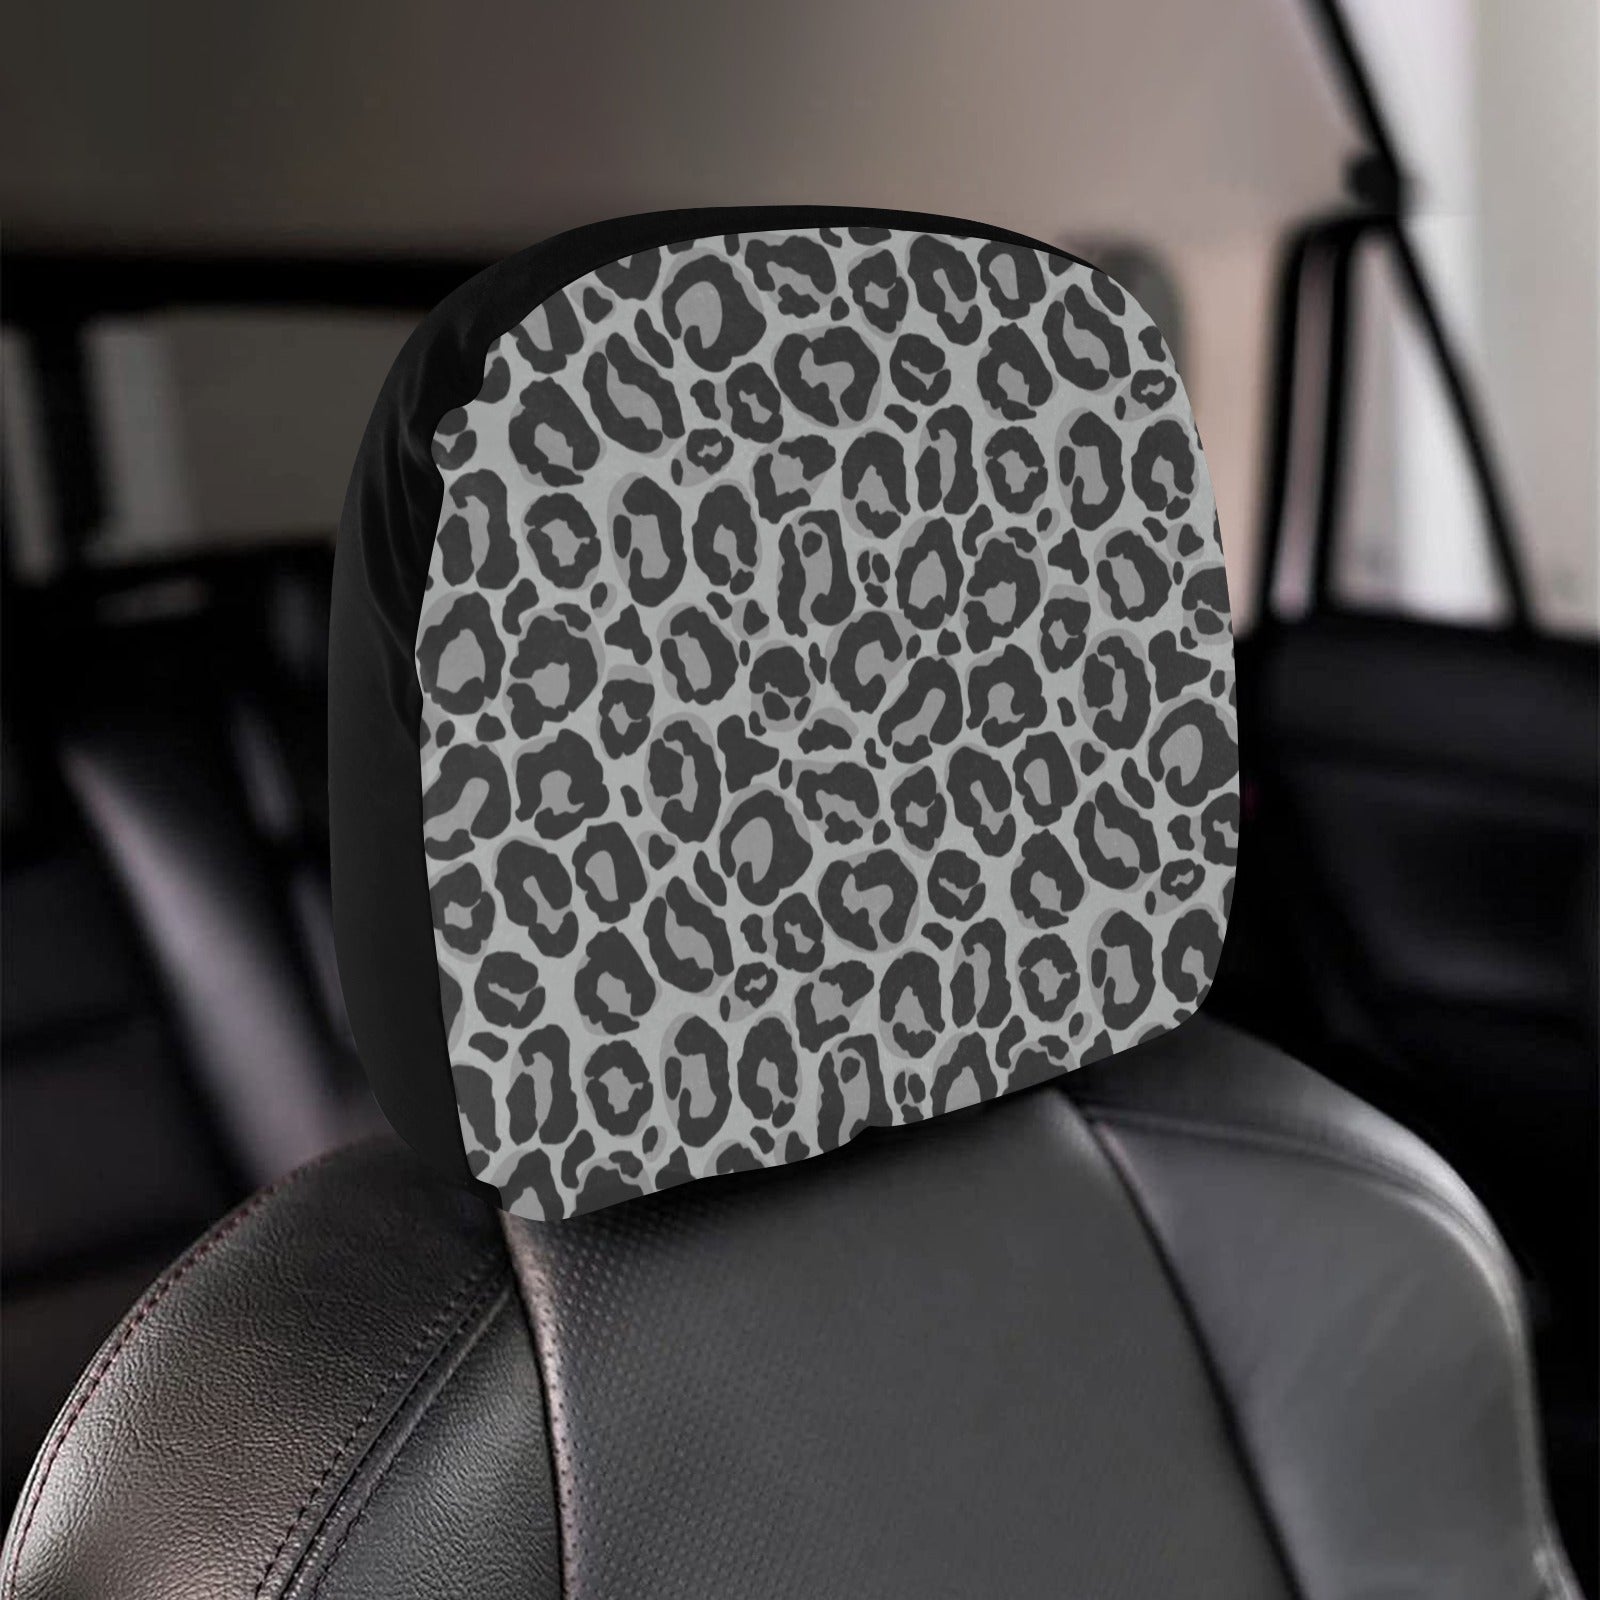 Grey Leopard Car Seat Headrest Cover (2pcs), Animal Print Truck Suv Van Vehicle Auto Decoration Protector New Car Gift Interior Starcove Fashion